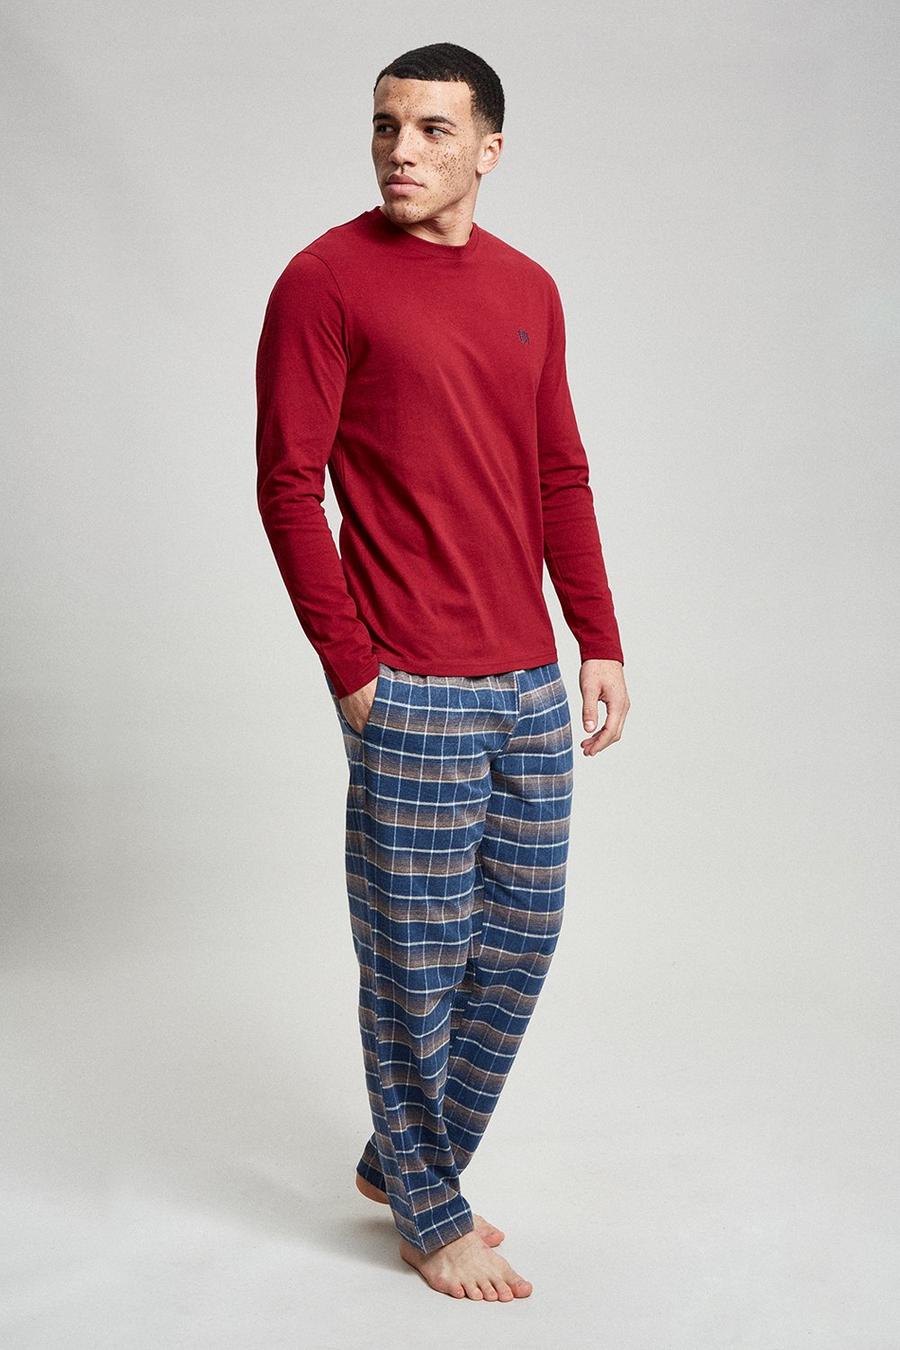 Burgundy Long Sleeve T-Shirt & Check Pyjama Set